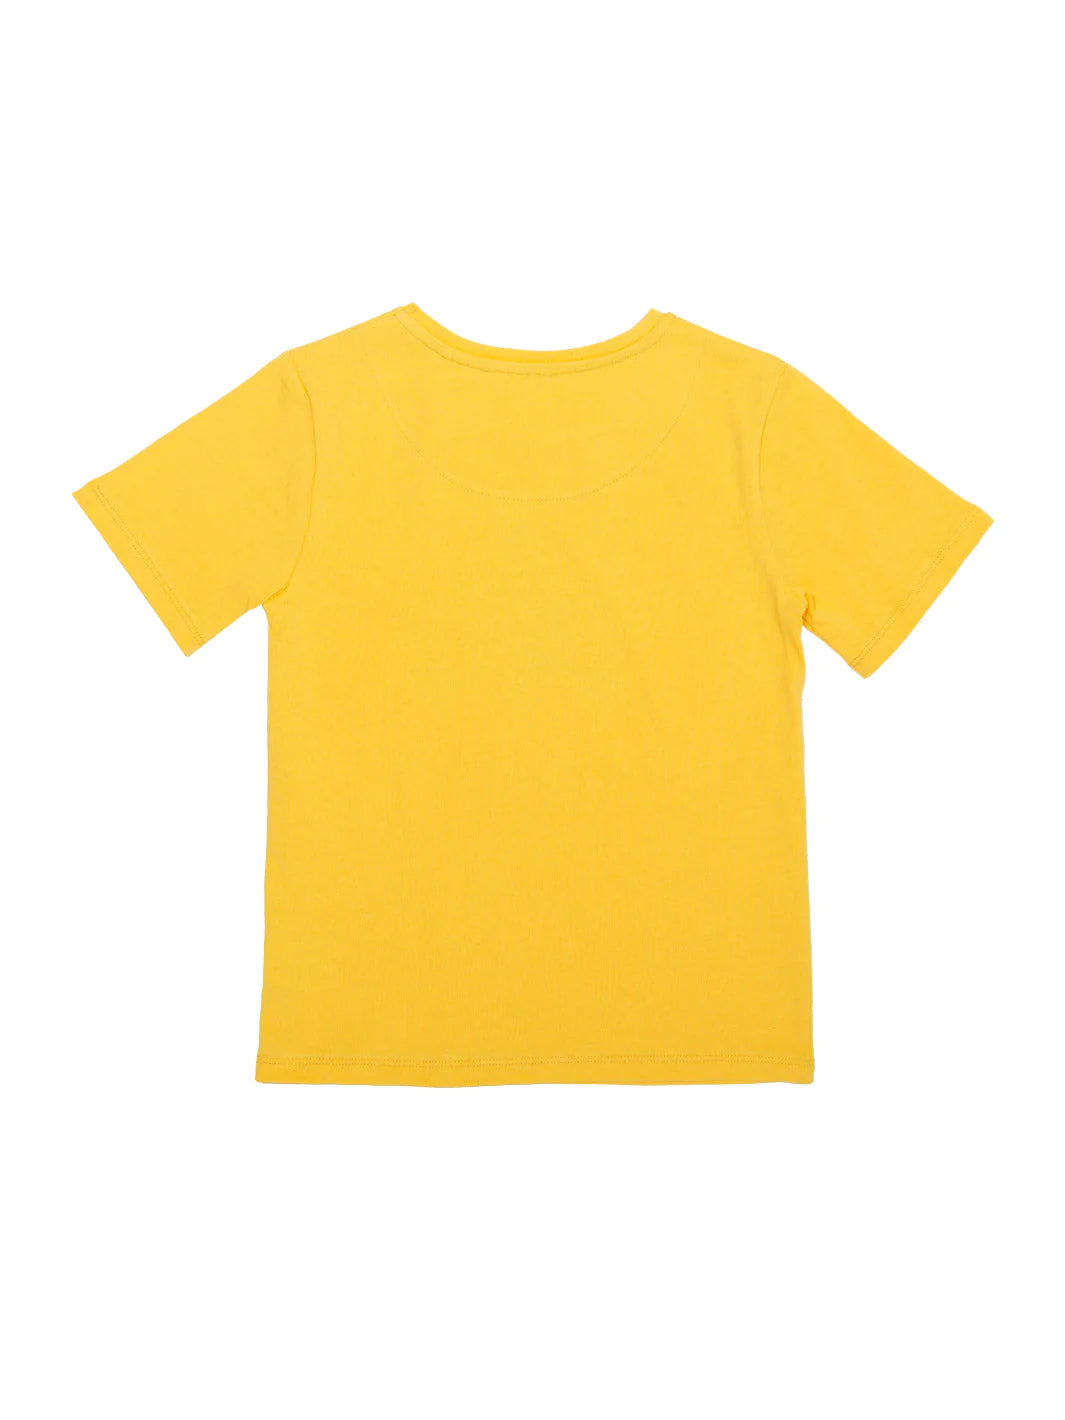 Kite Planet Protector T-Shirt - Yellow